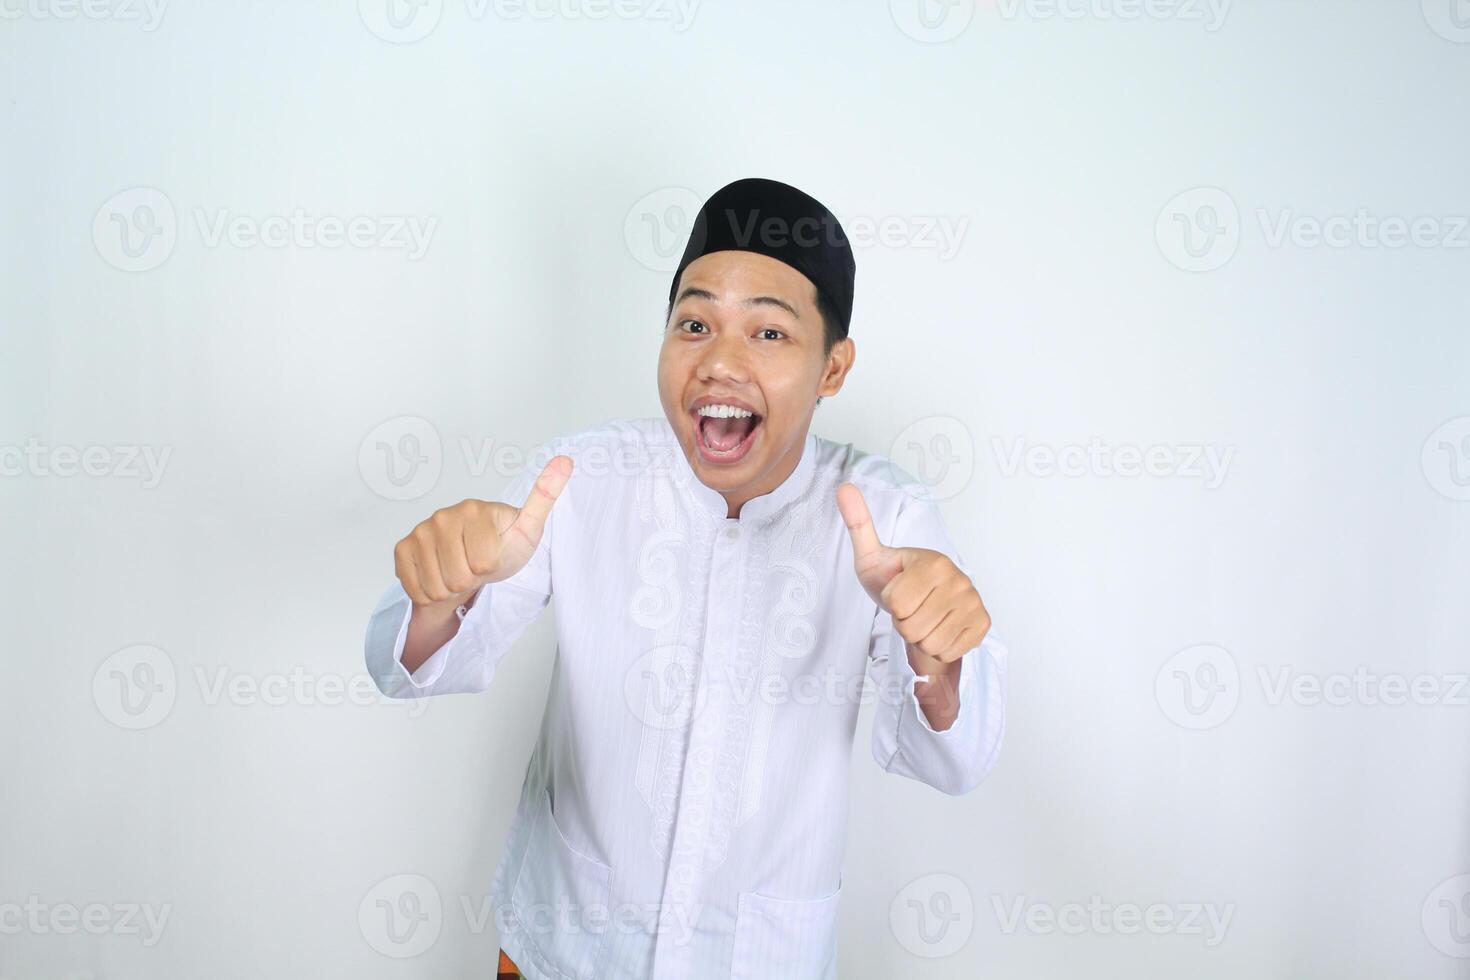 allegro musulmano asiatico uomo urlando mentre dando pollice su isolato su bianca sfondo foto